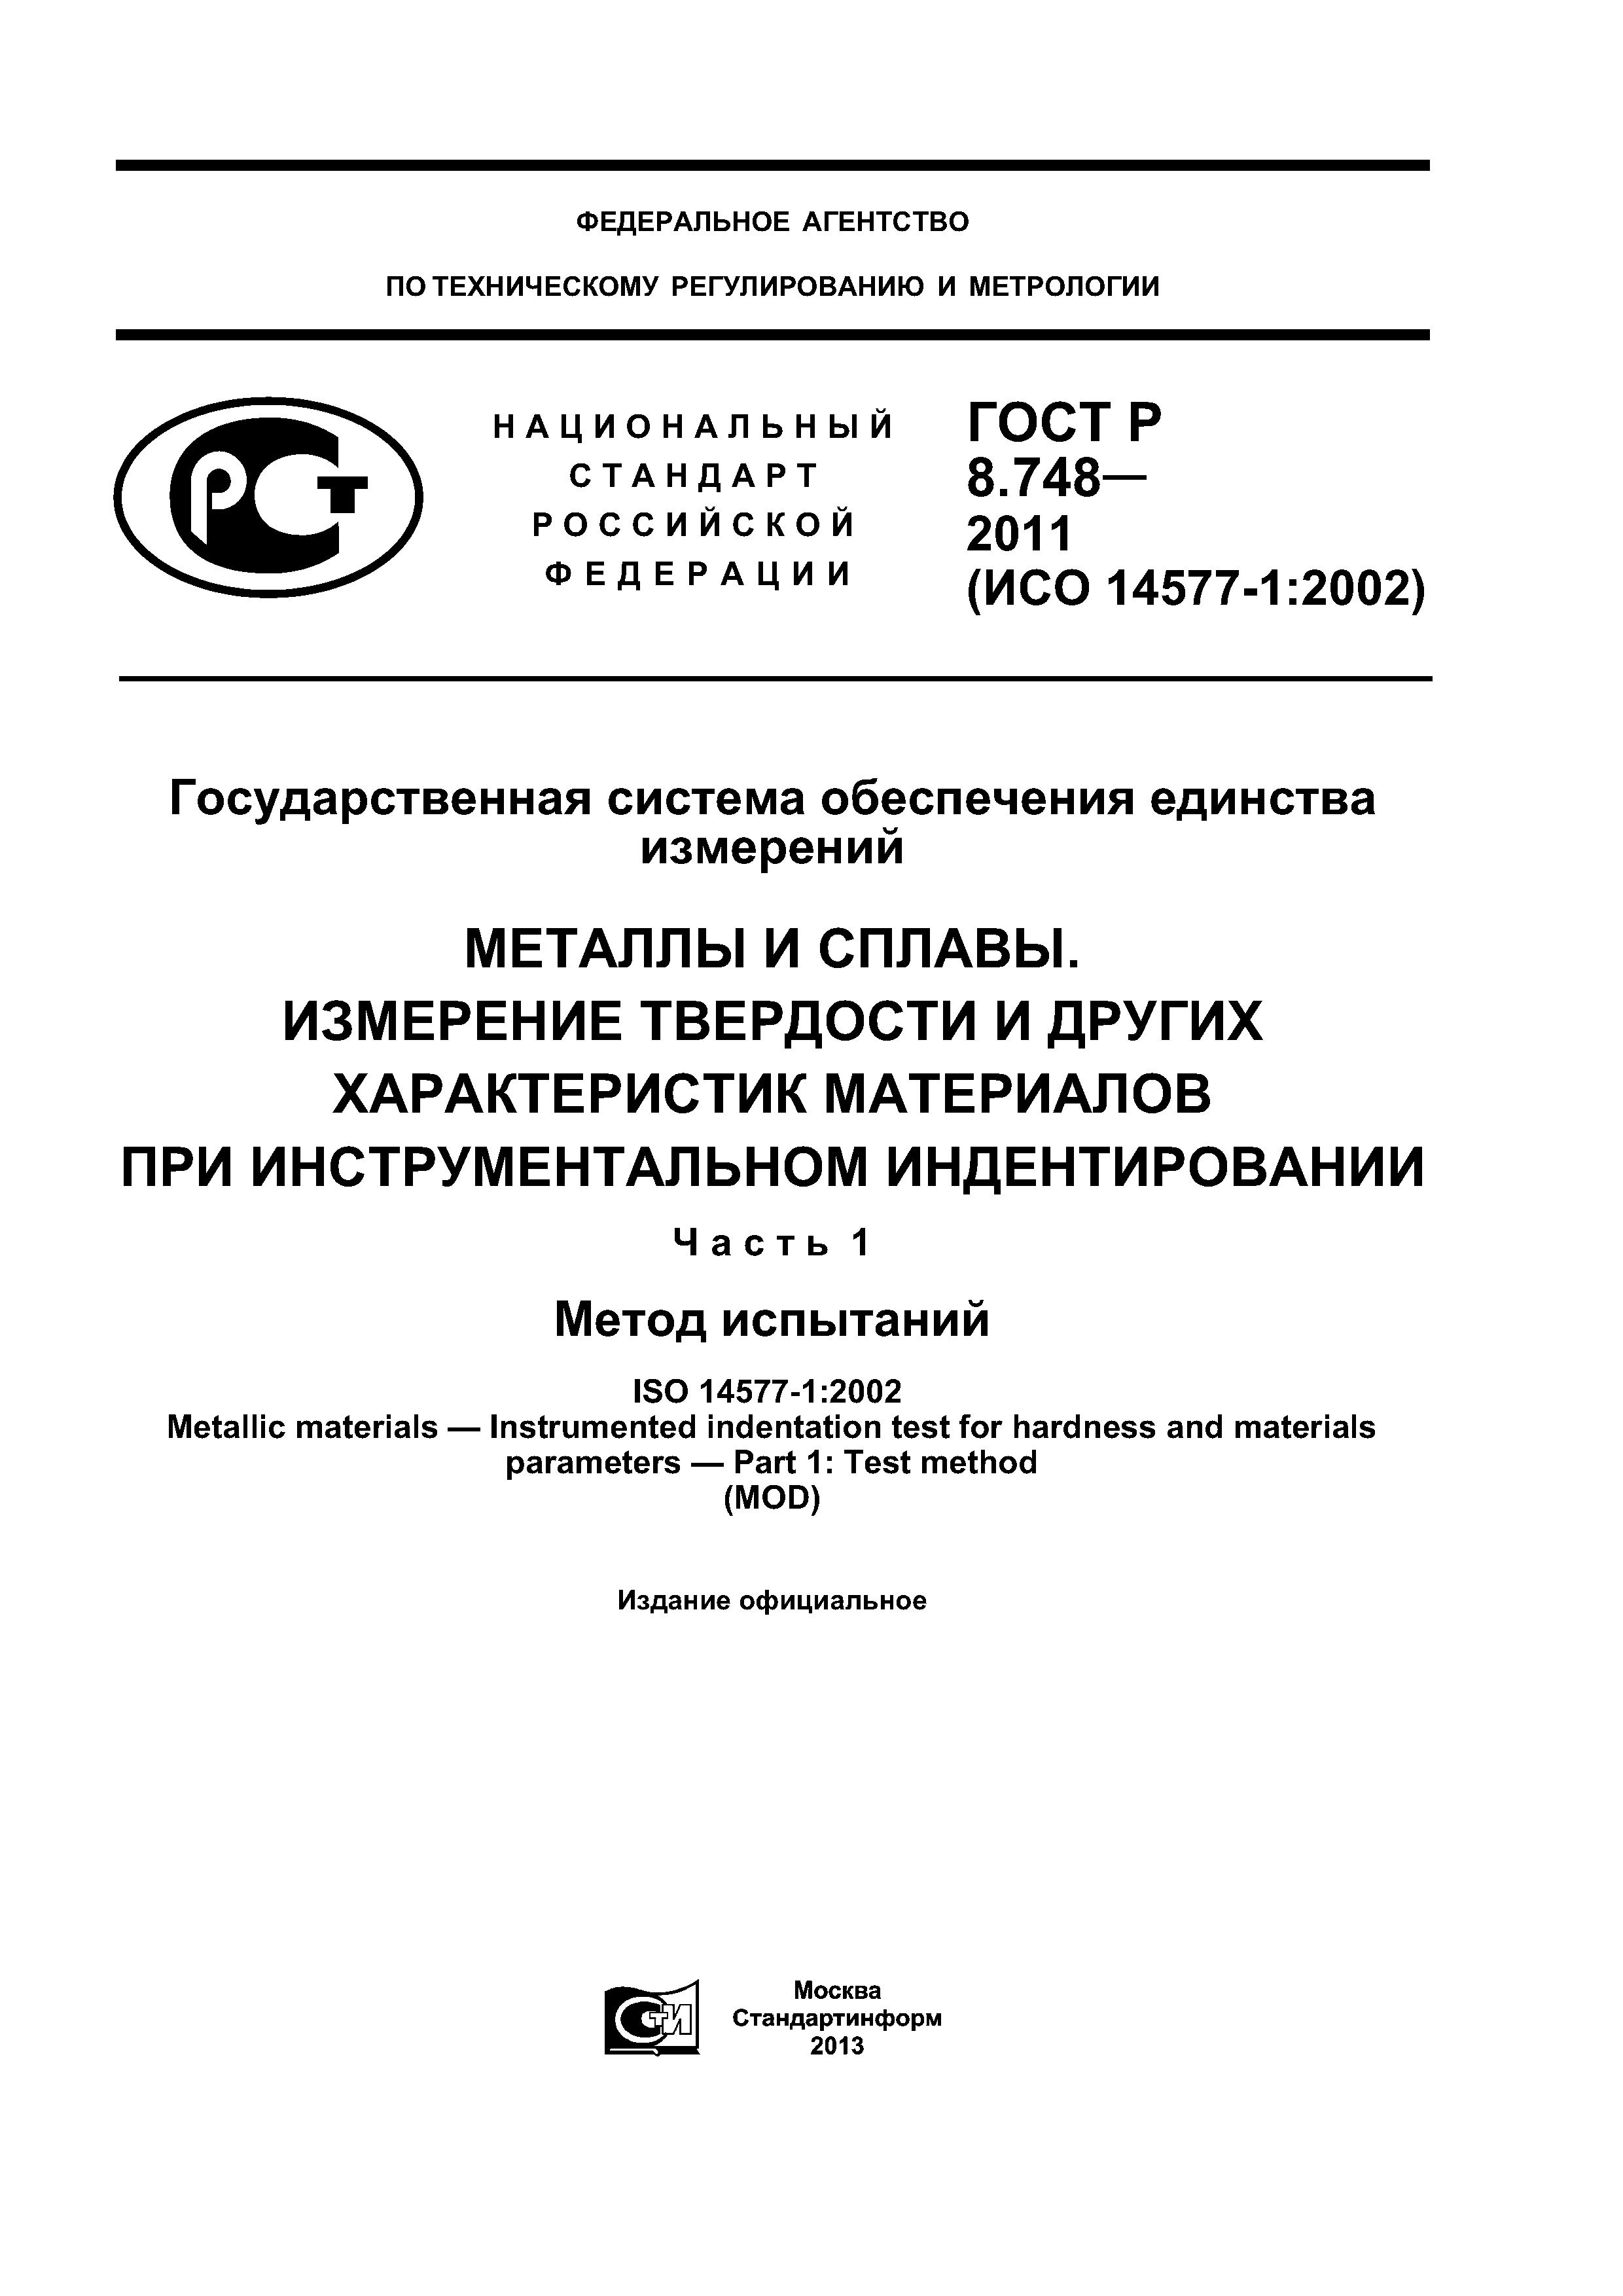 ГОСТ Р 8.748-2011